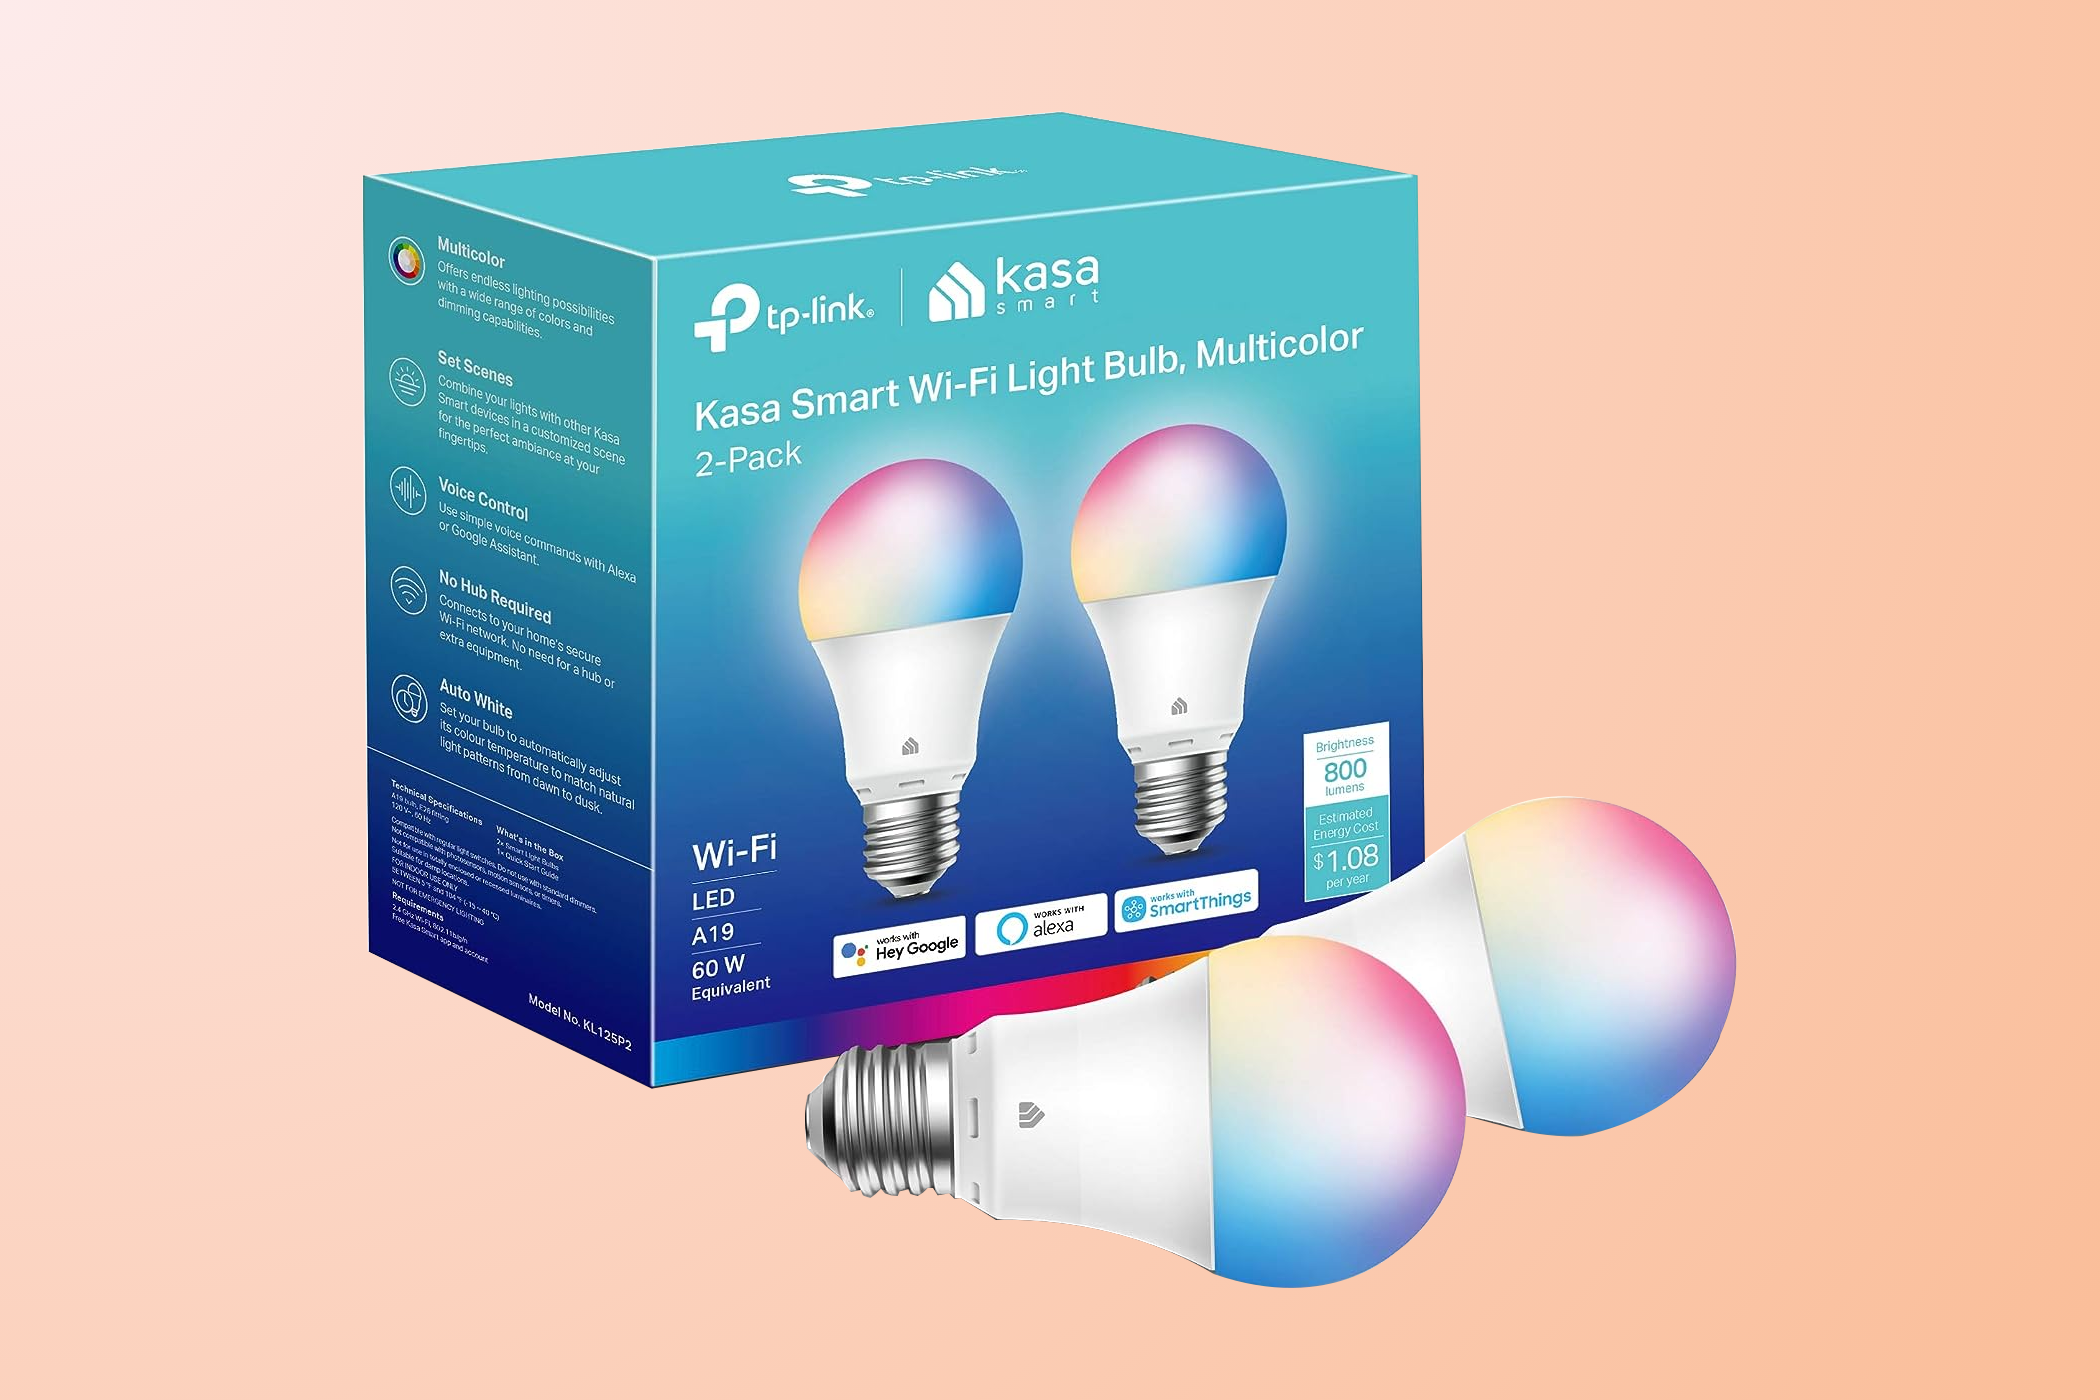 Two-pack of Kasa smart light bulbs